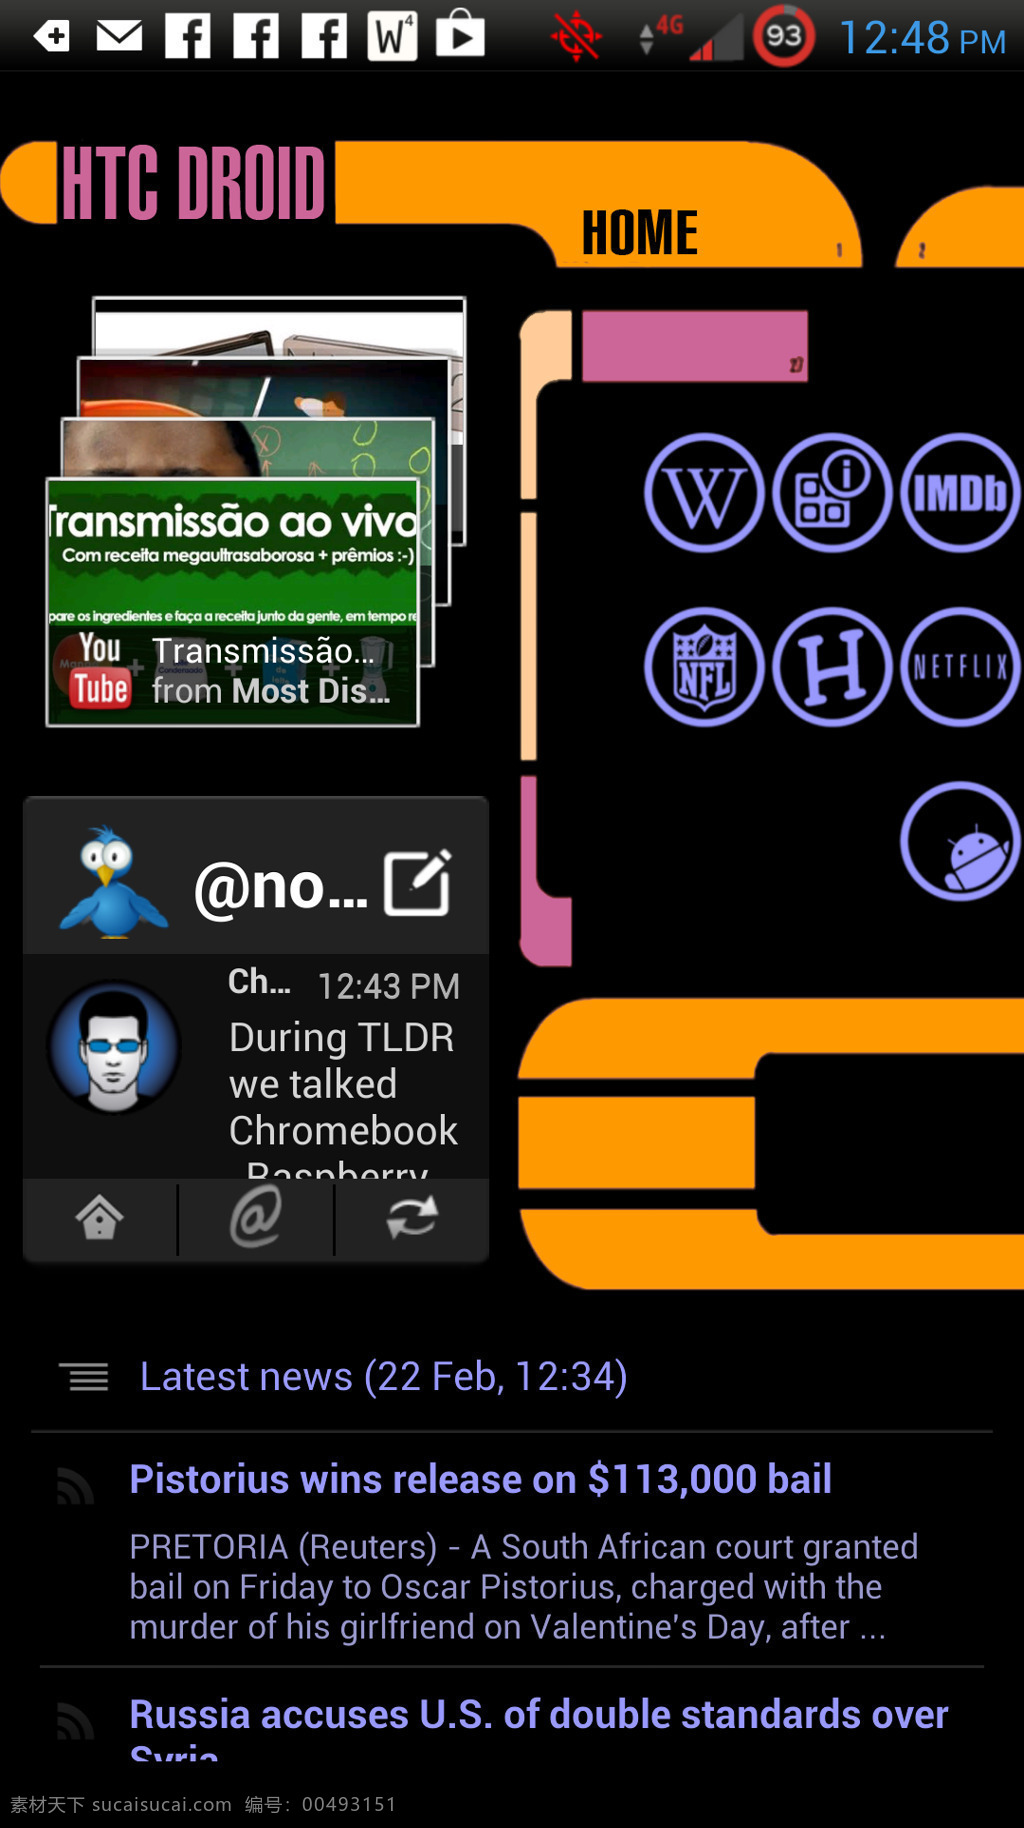 android app 界面设计 ios ipad iphone 安卓界面 手机app 星际 旅行 lcars 主题 界面设计下载 手机 模板下载 界面下载 免费 app图标